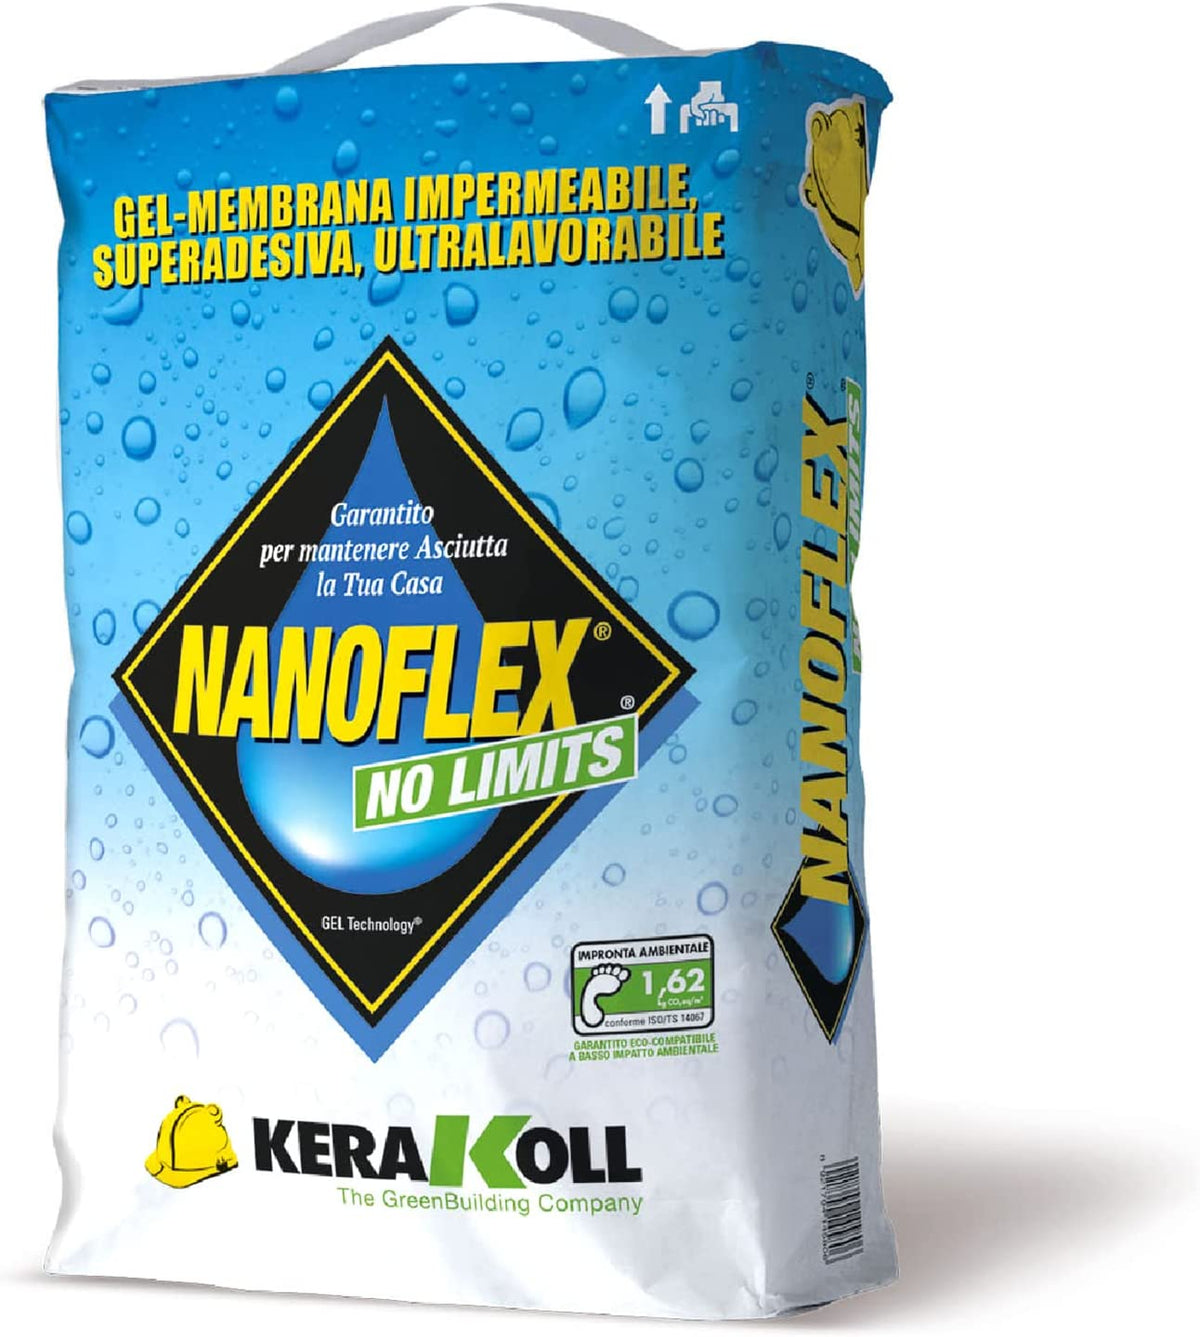 Kerakoll Nanoflex no limits 20 kg - Impermeabilizzante